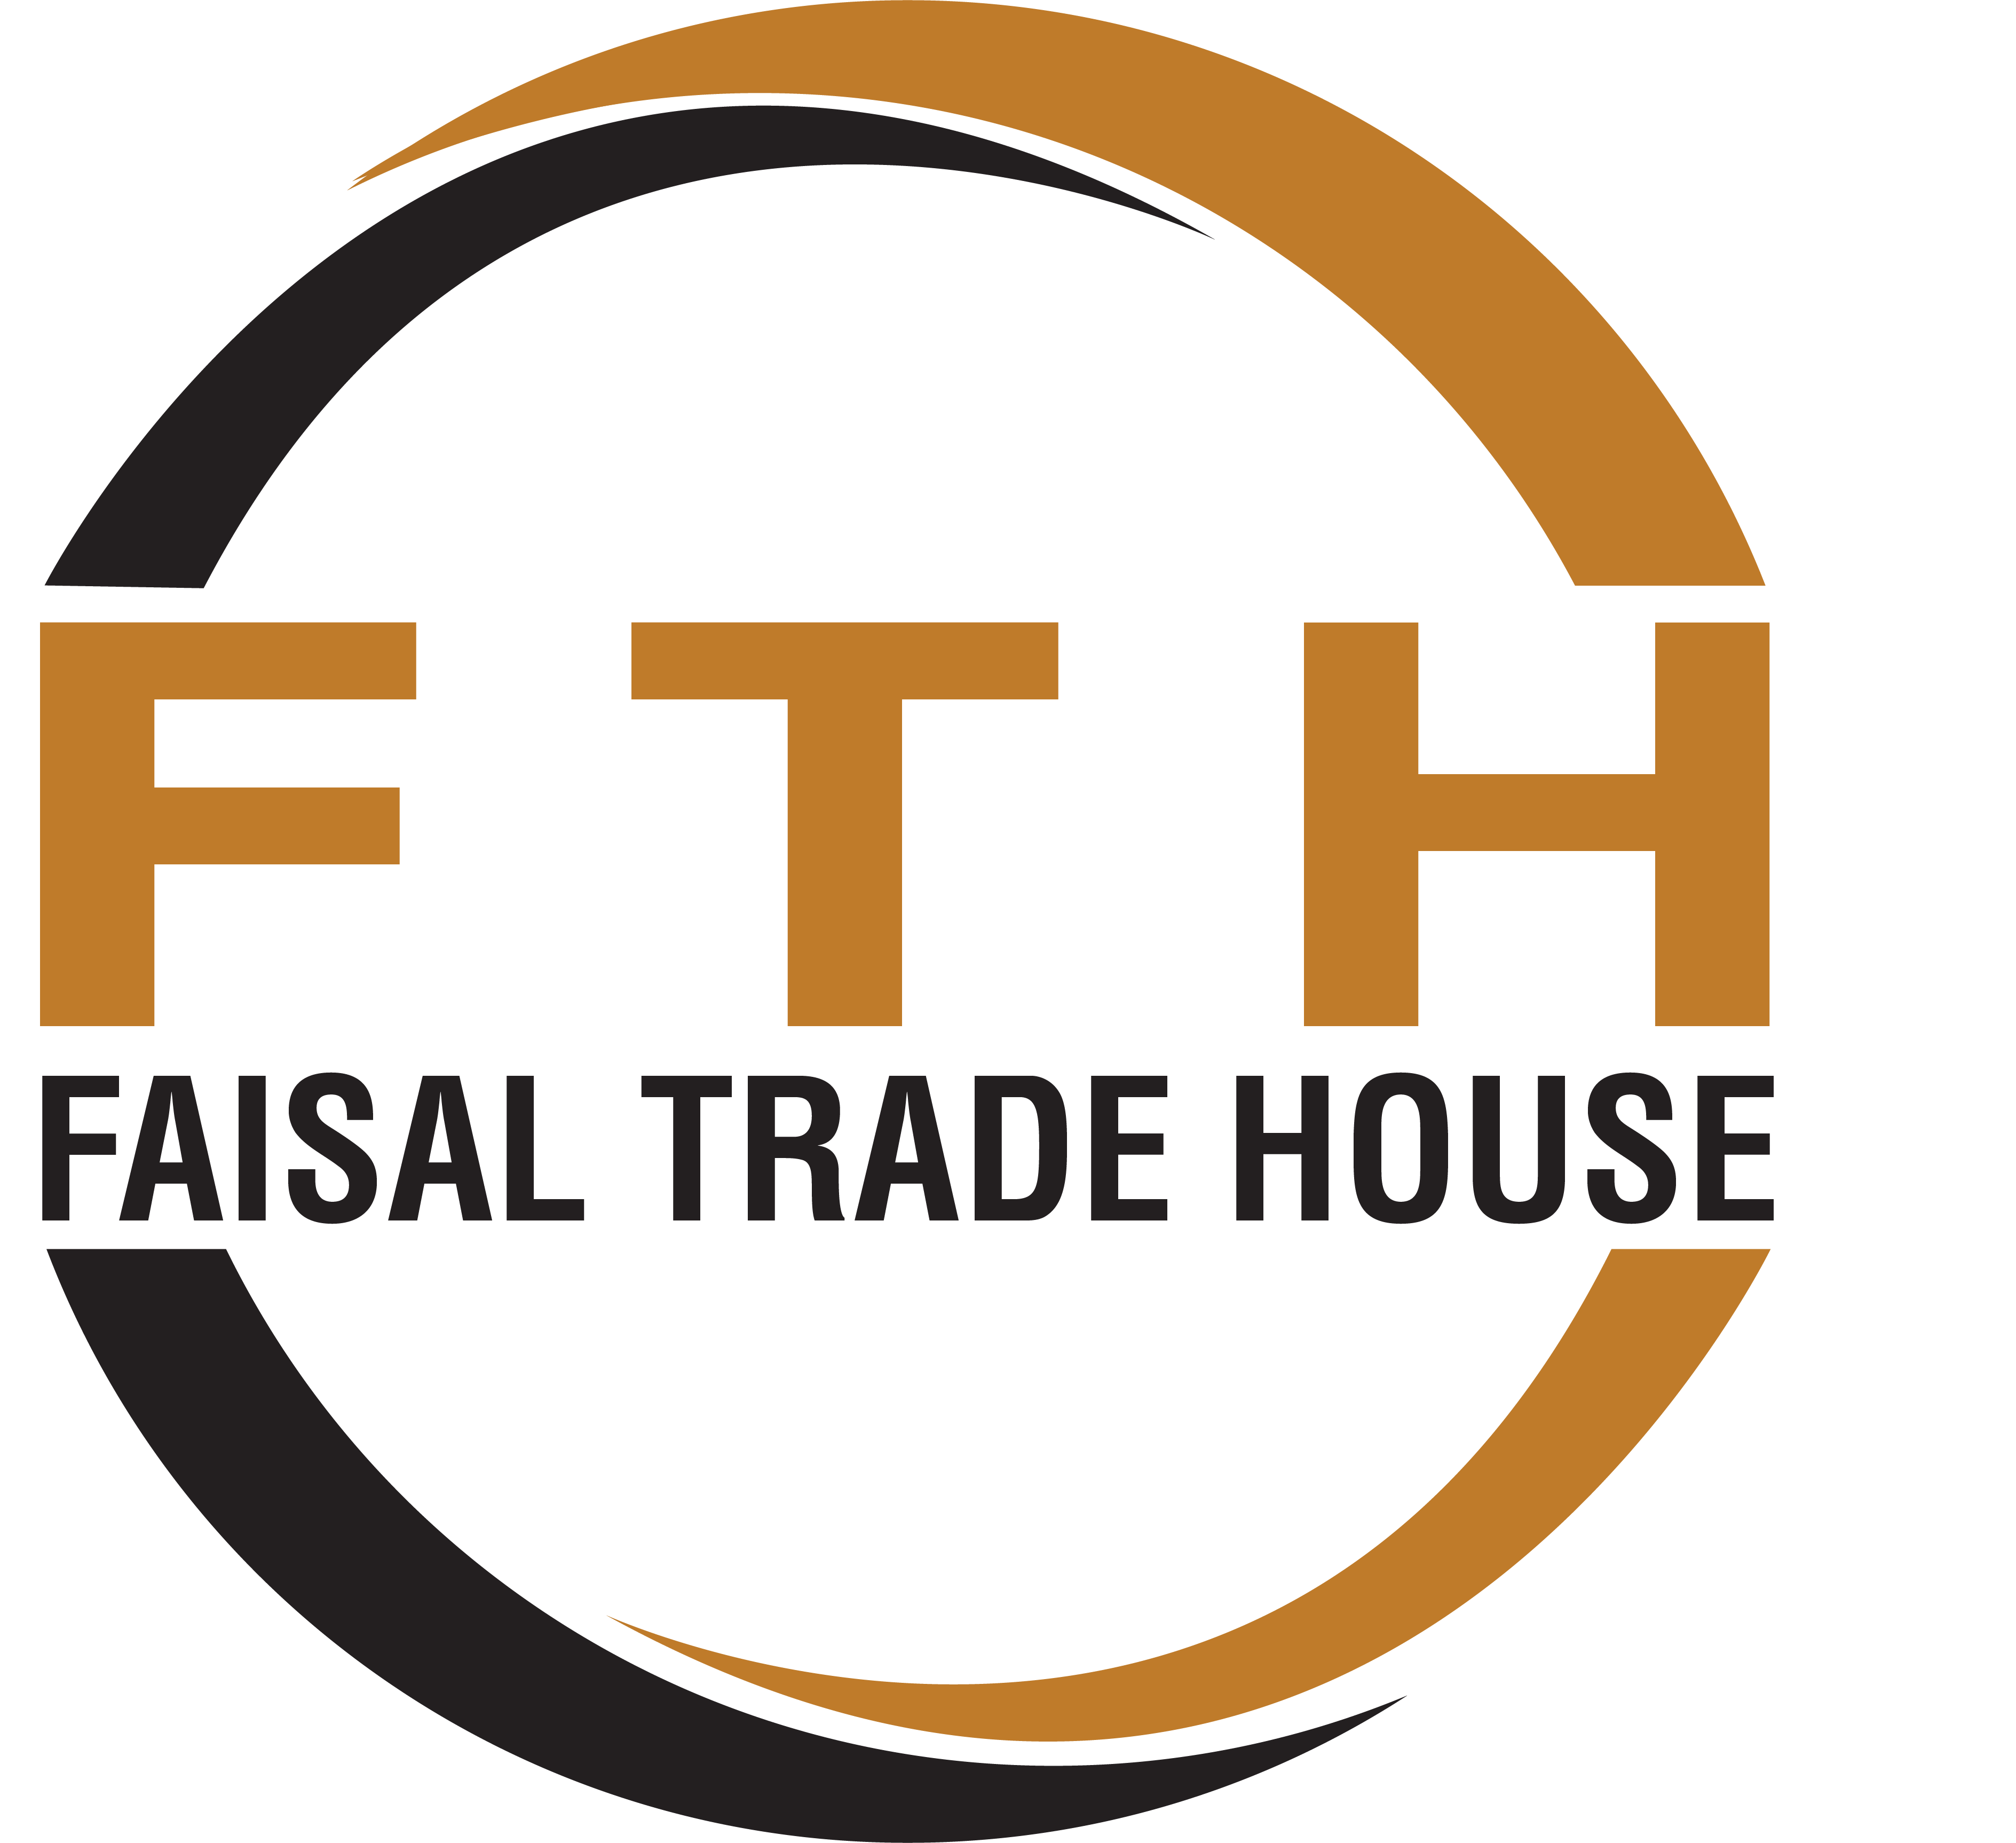 Faisal Trade House